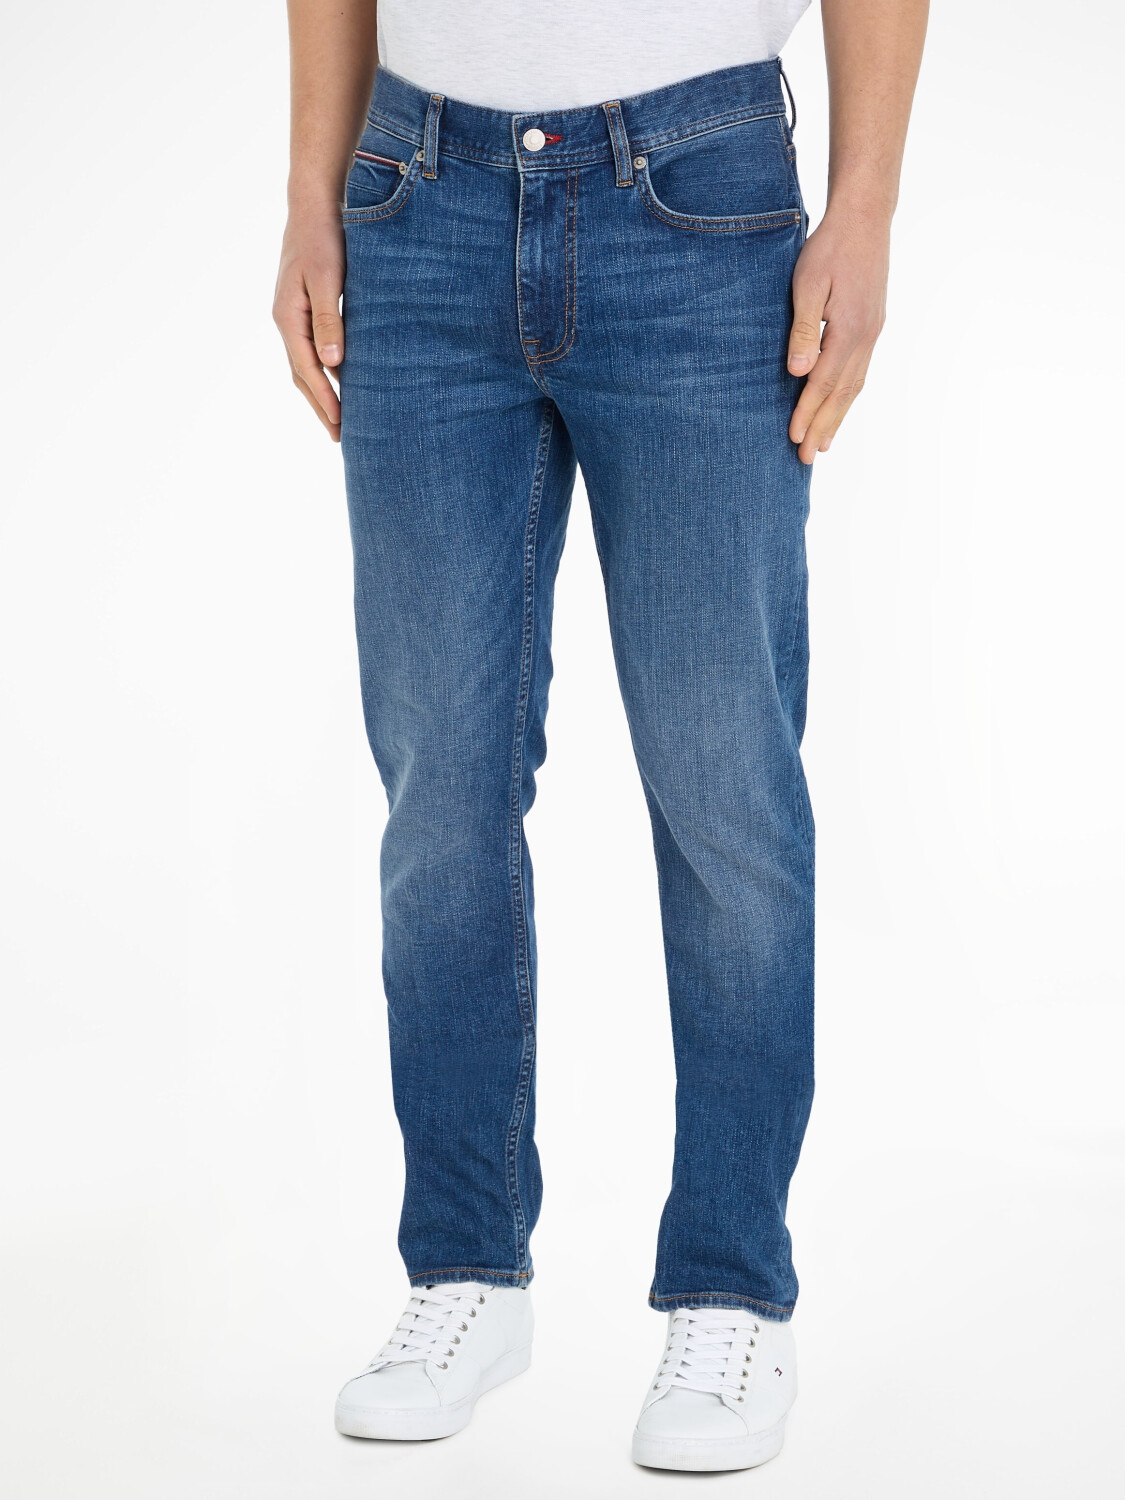 Tommy Hilfiger Denton bei Jeans Preisvergleich mandall € (MW0MW33945) indigo Fitted Straight 62,99 Faded ab 